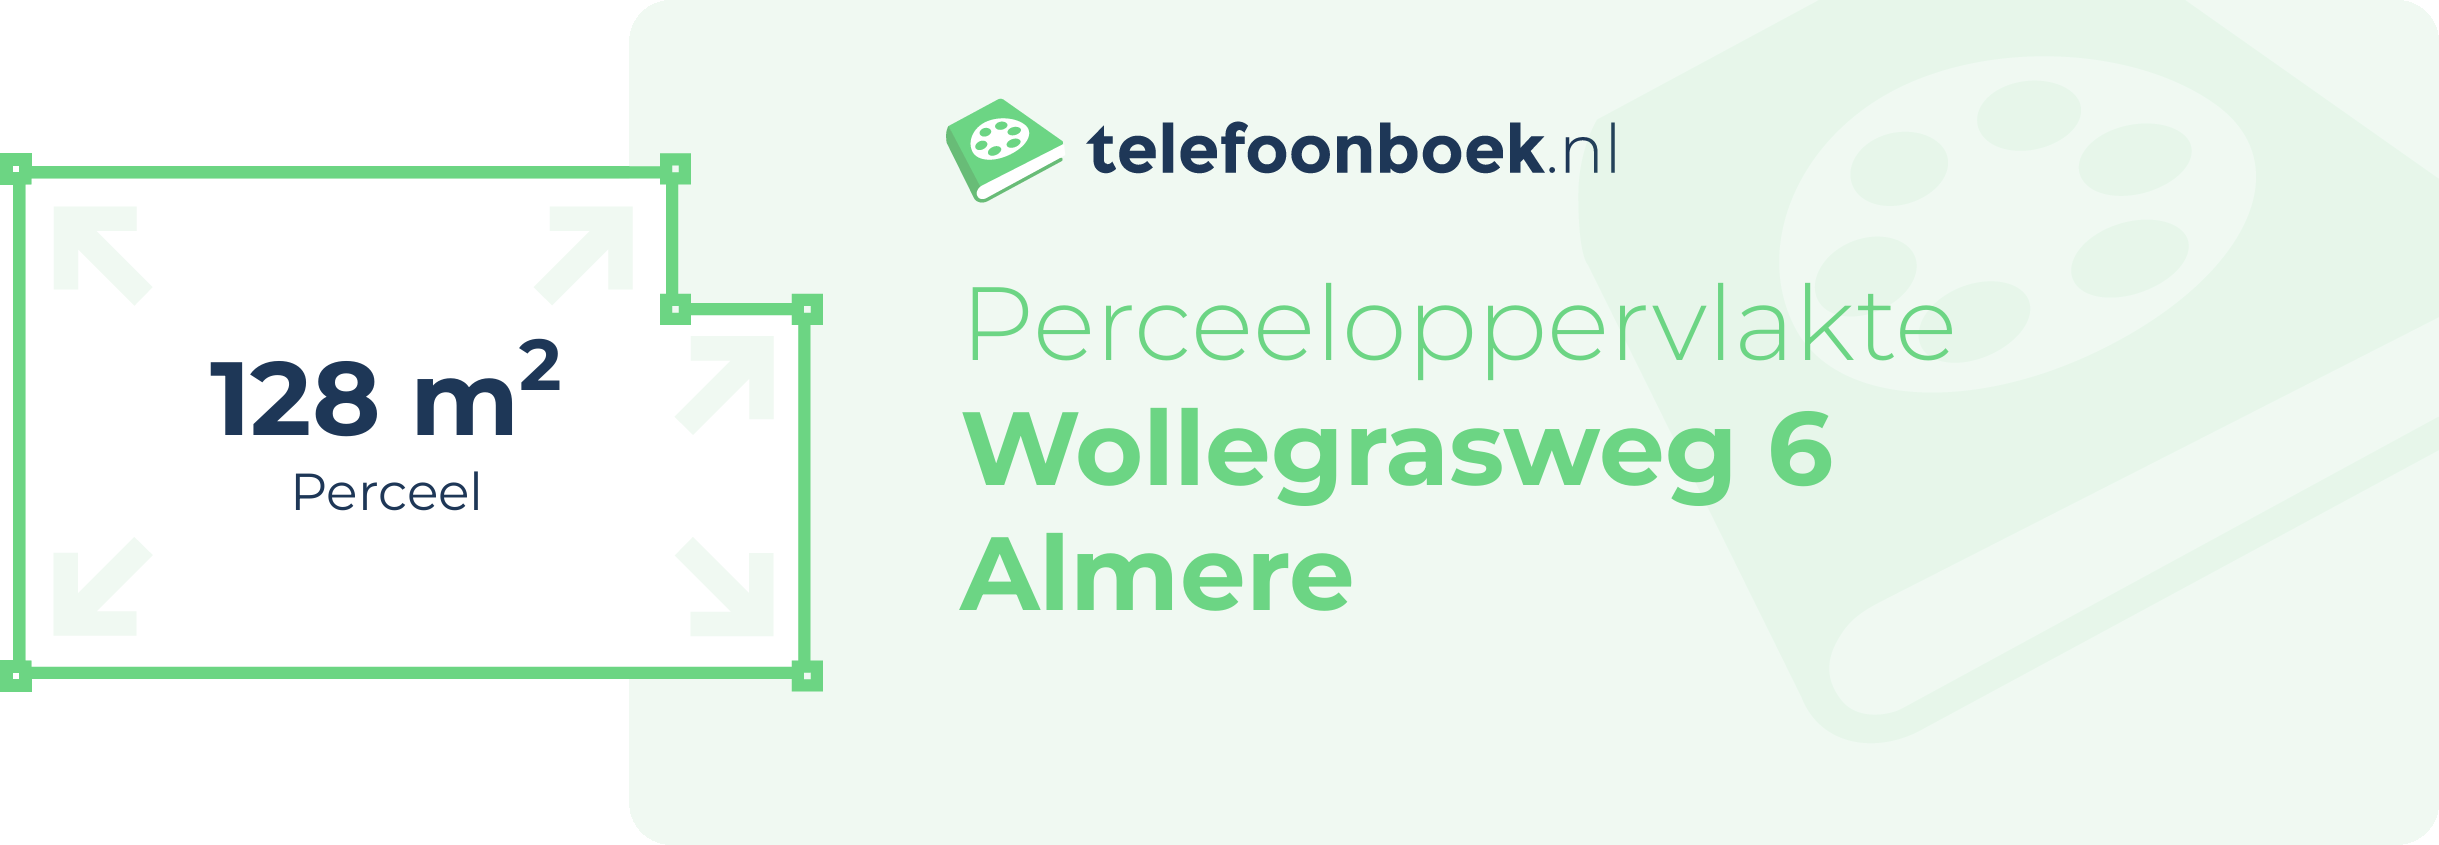 Perceeloppervlakte Wollegrasweg 6 Almere